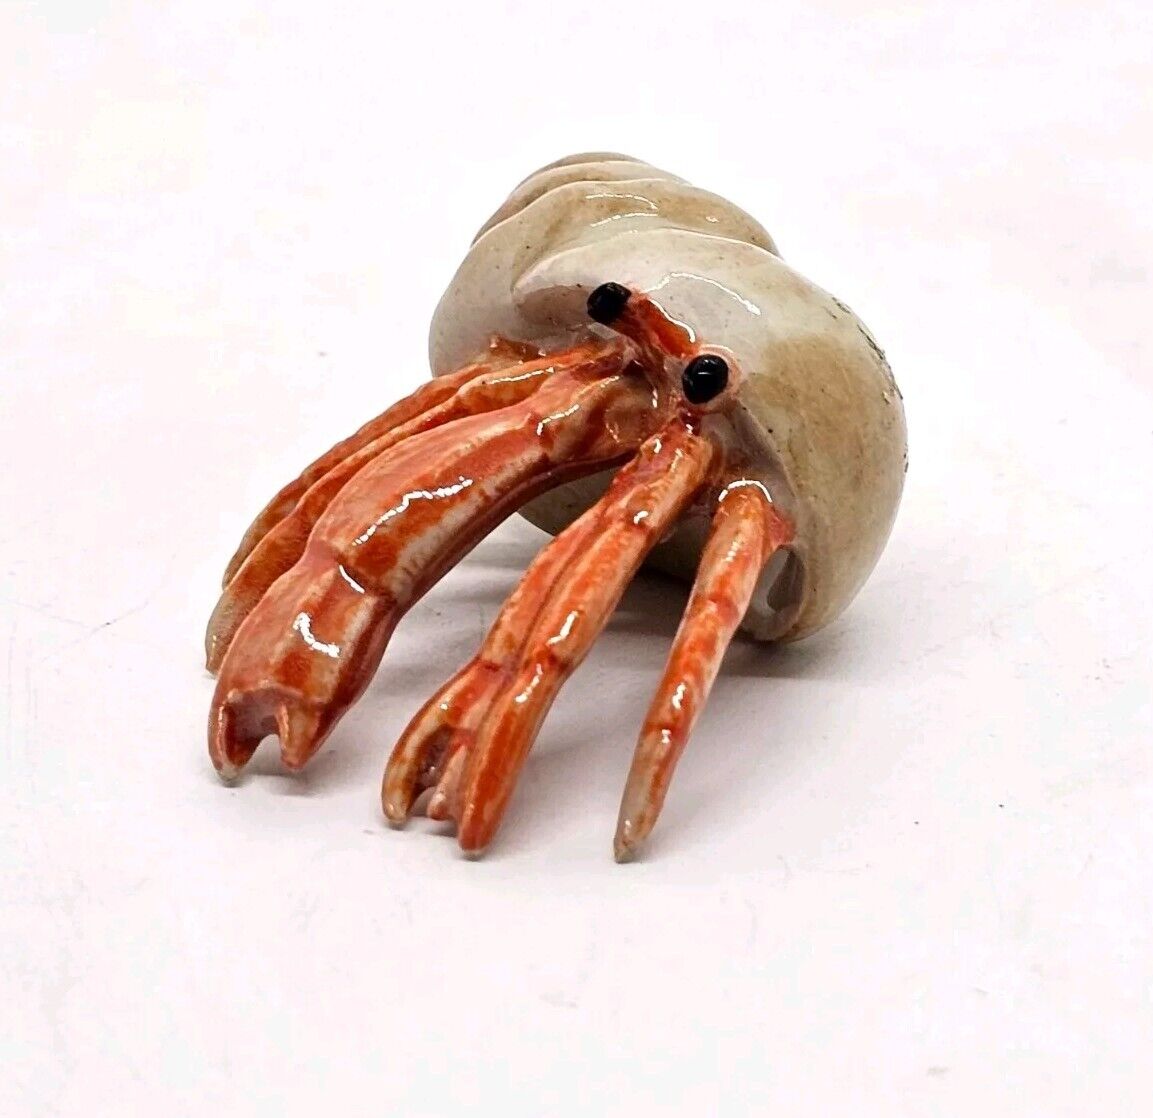 Little Critterz Miniature Porcelain Figurines Hermit Crab Northern Rose